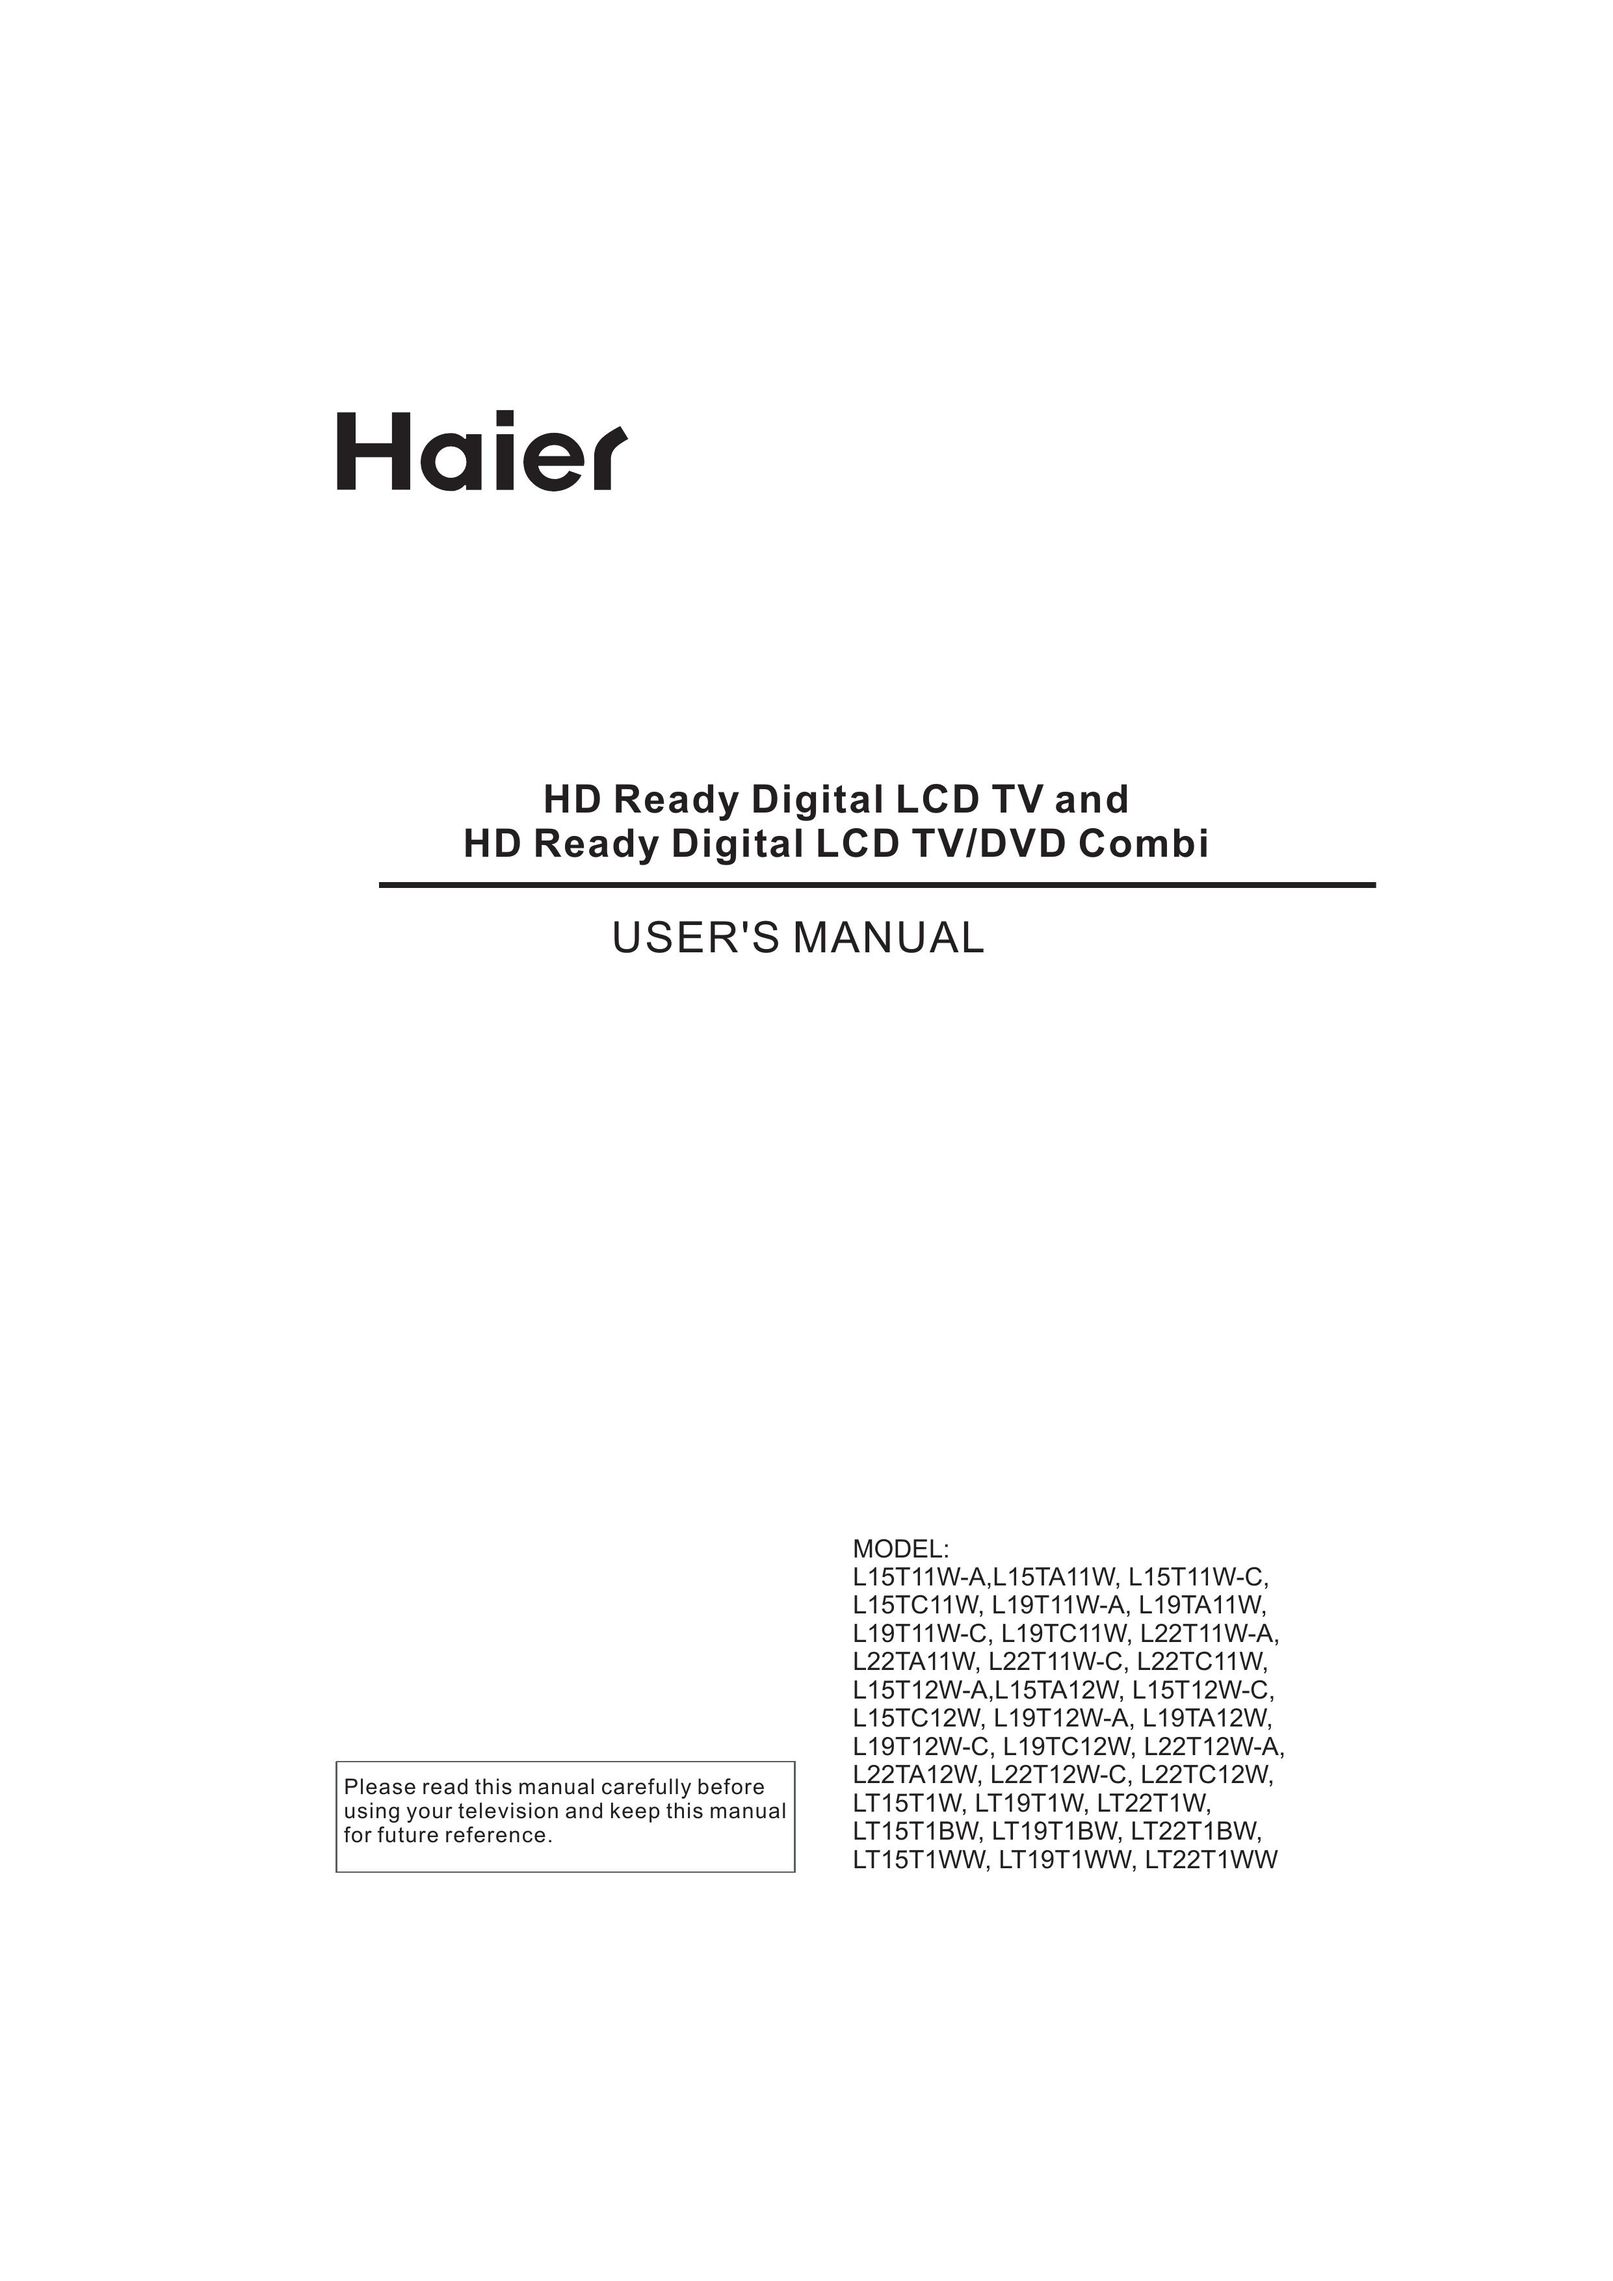 Haier L19T12W-A TV DVD Combo User Manual